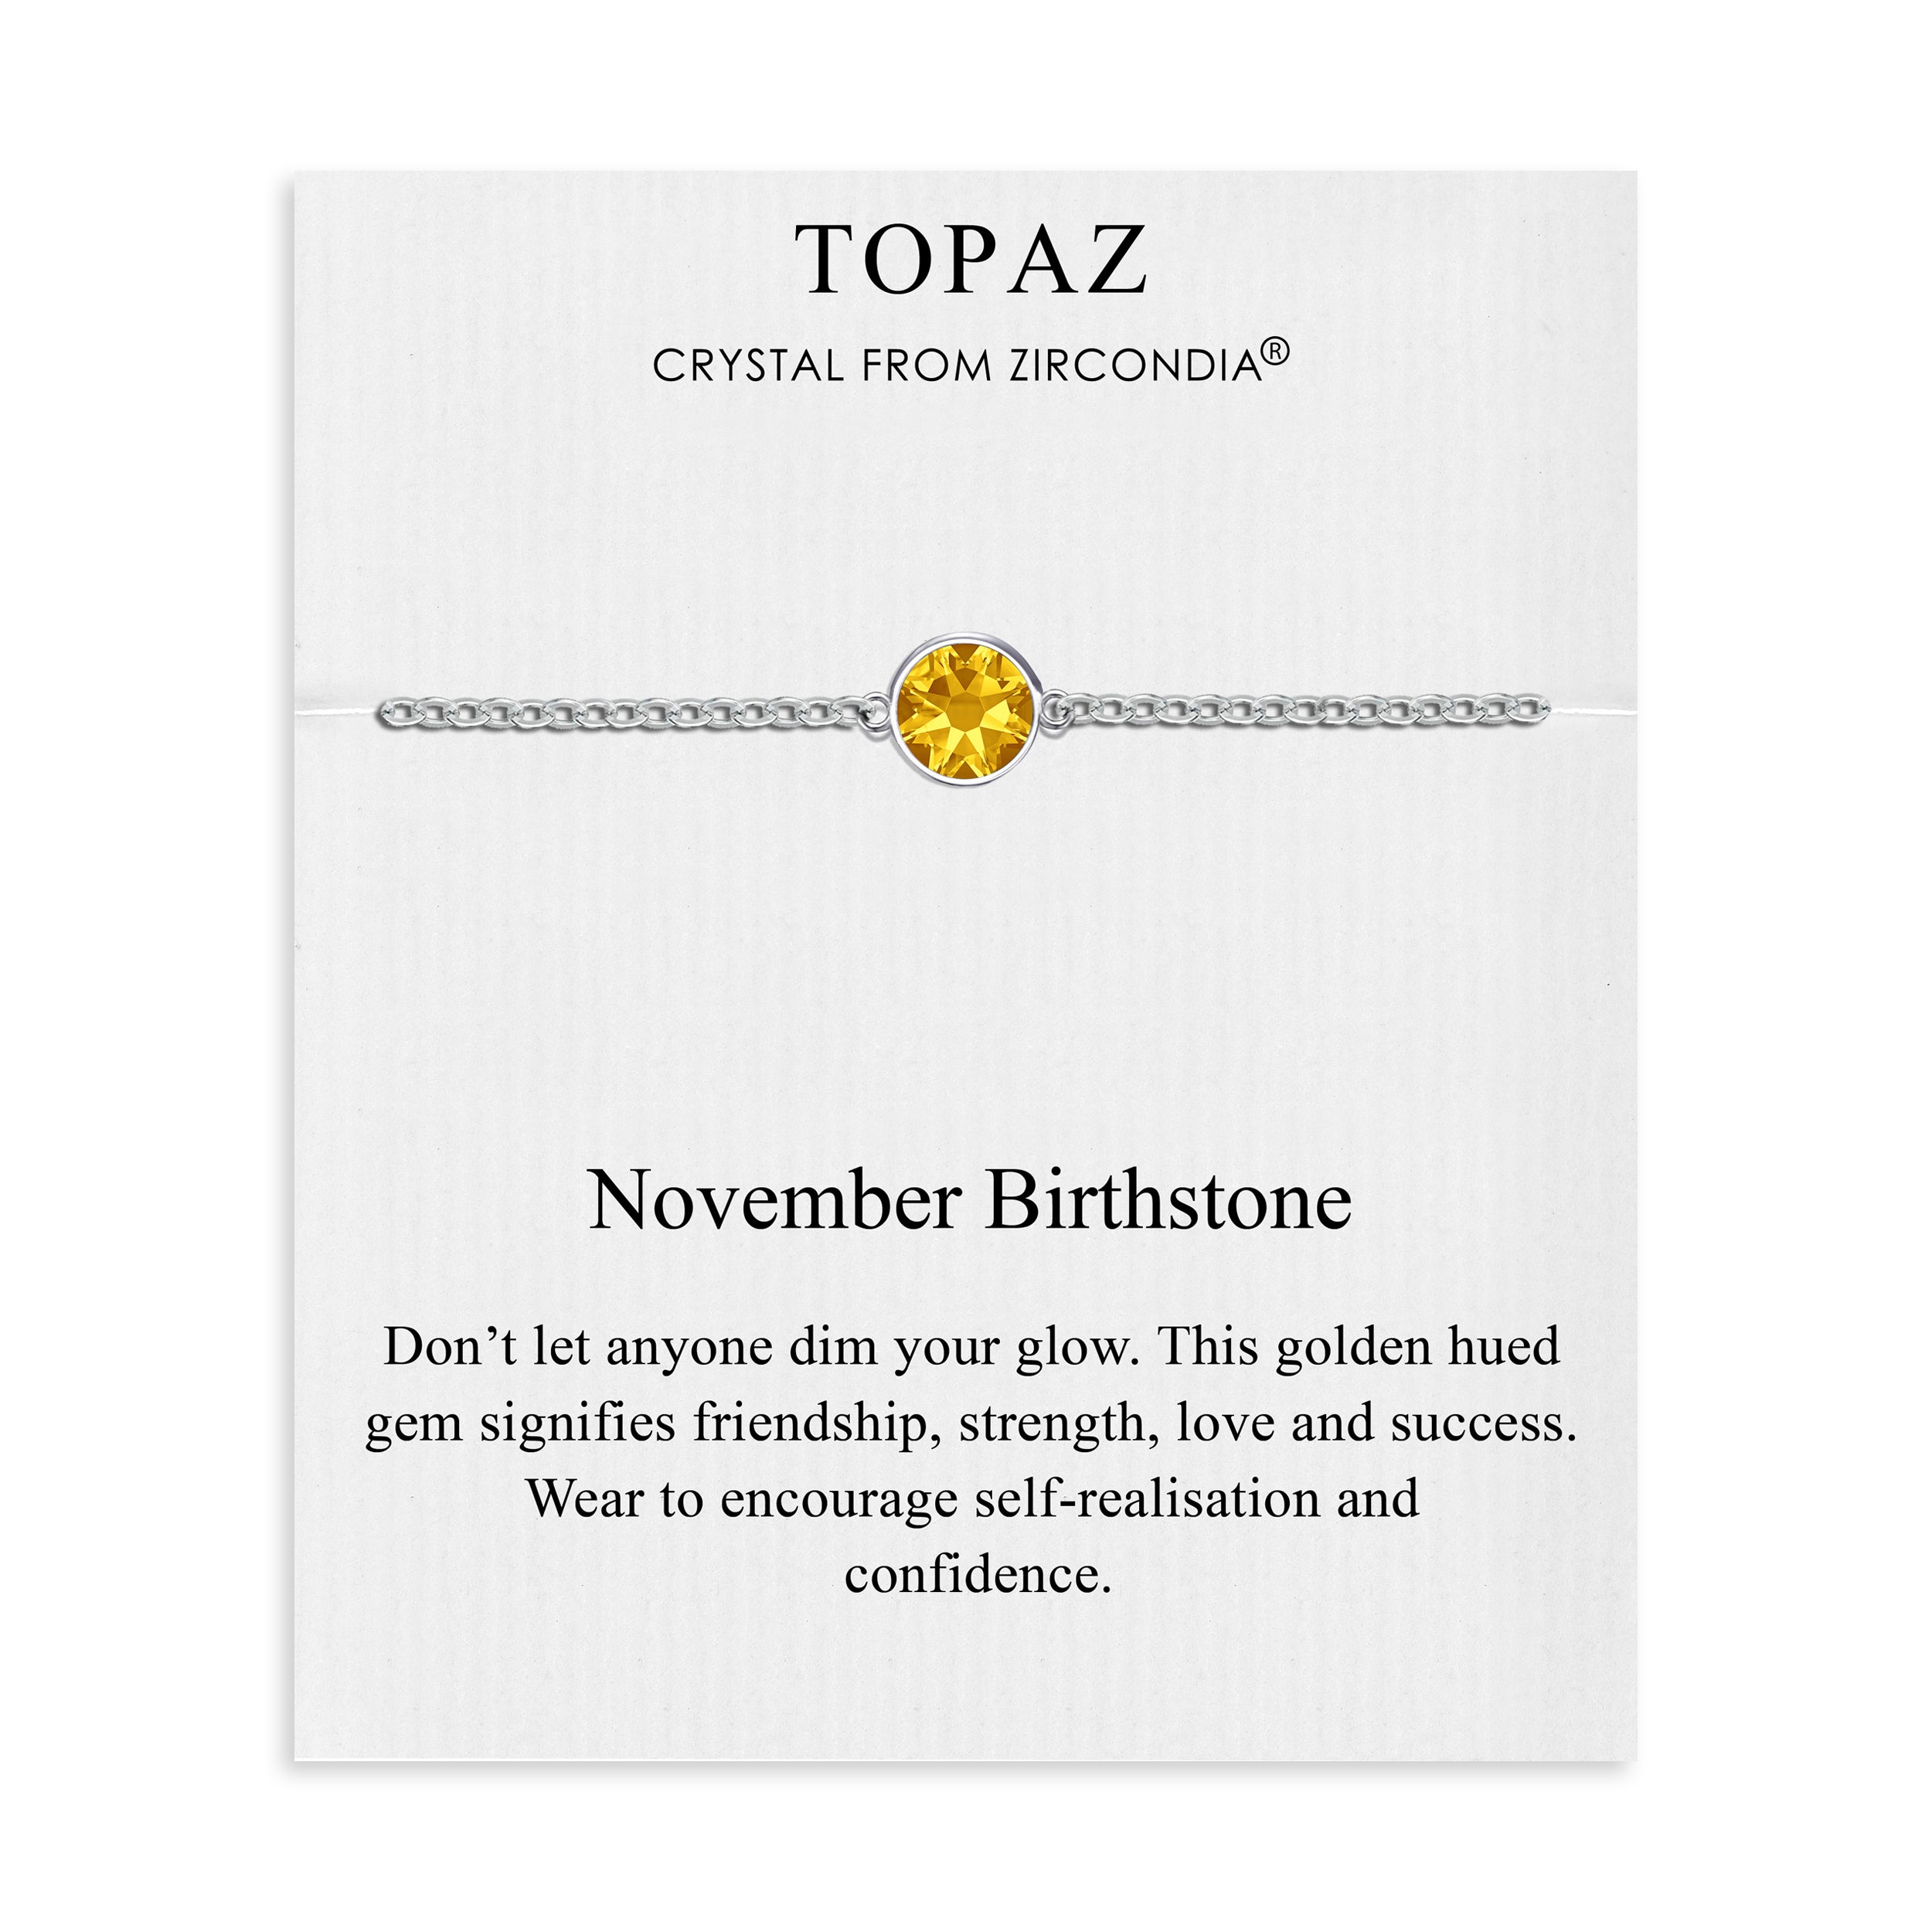 November (Topaz) Birthstone Anklet Created with Zircondia® Crystals